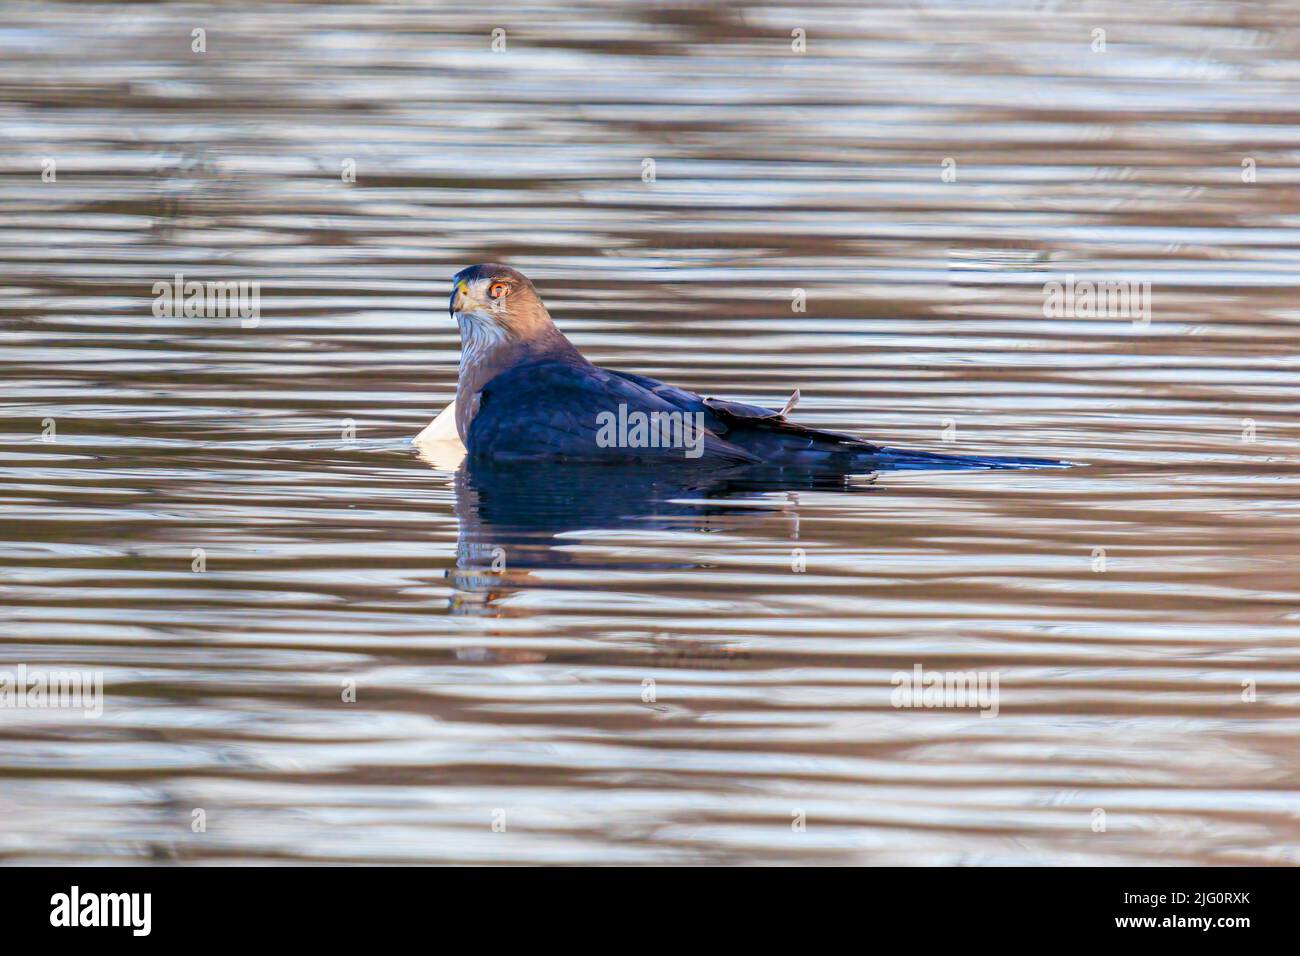 00784-00701 Hawk de Cooper (Accipiter cooperii) Ahogando Gull de Bonaparte después de golpearlo en el agua Clinton Co. Il Foto de stock